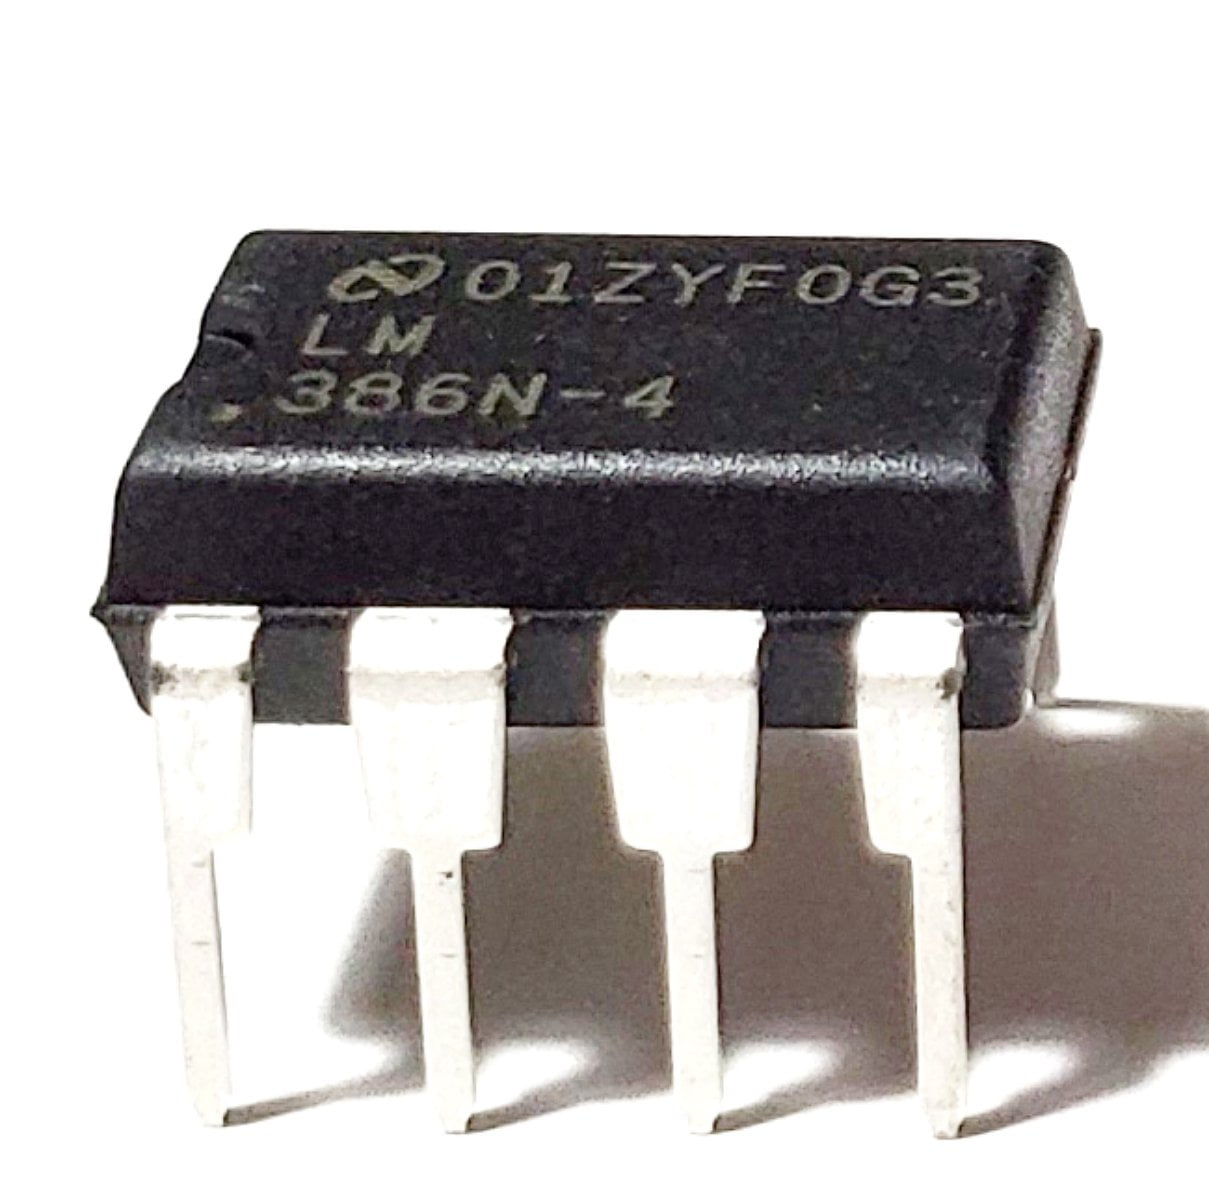 2x lm386n audio amplifier circuit dip-8 217ic144 national